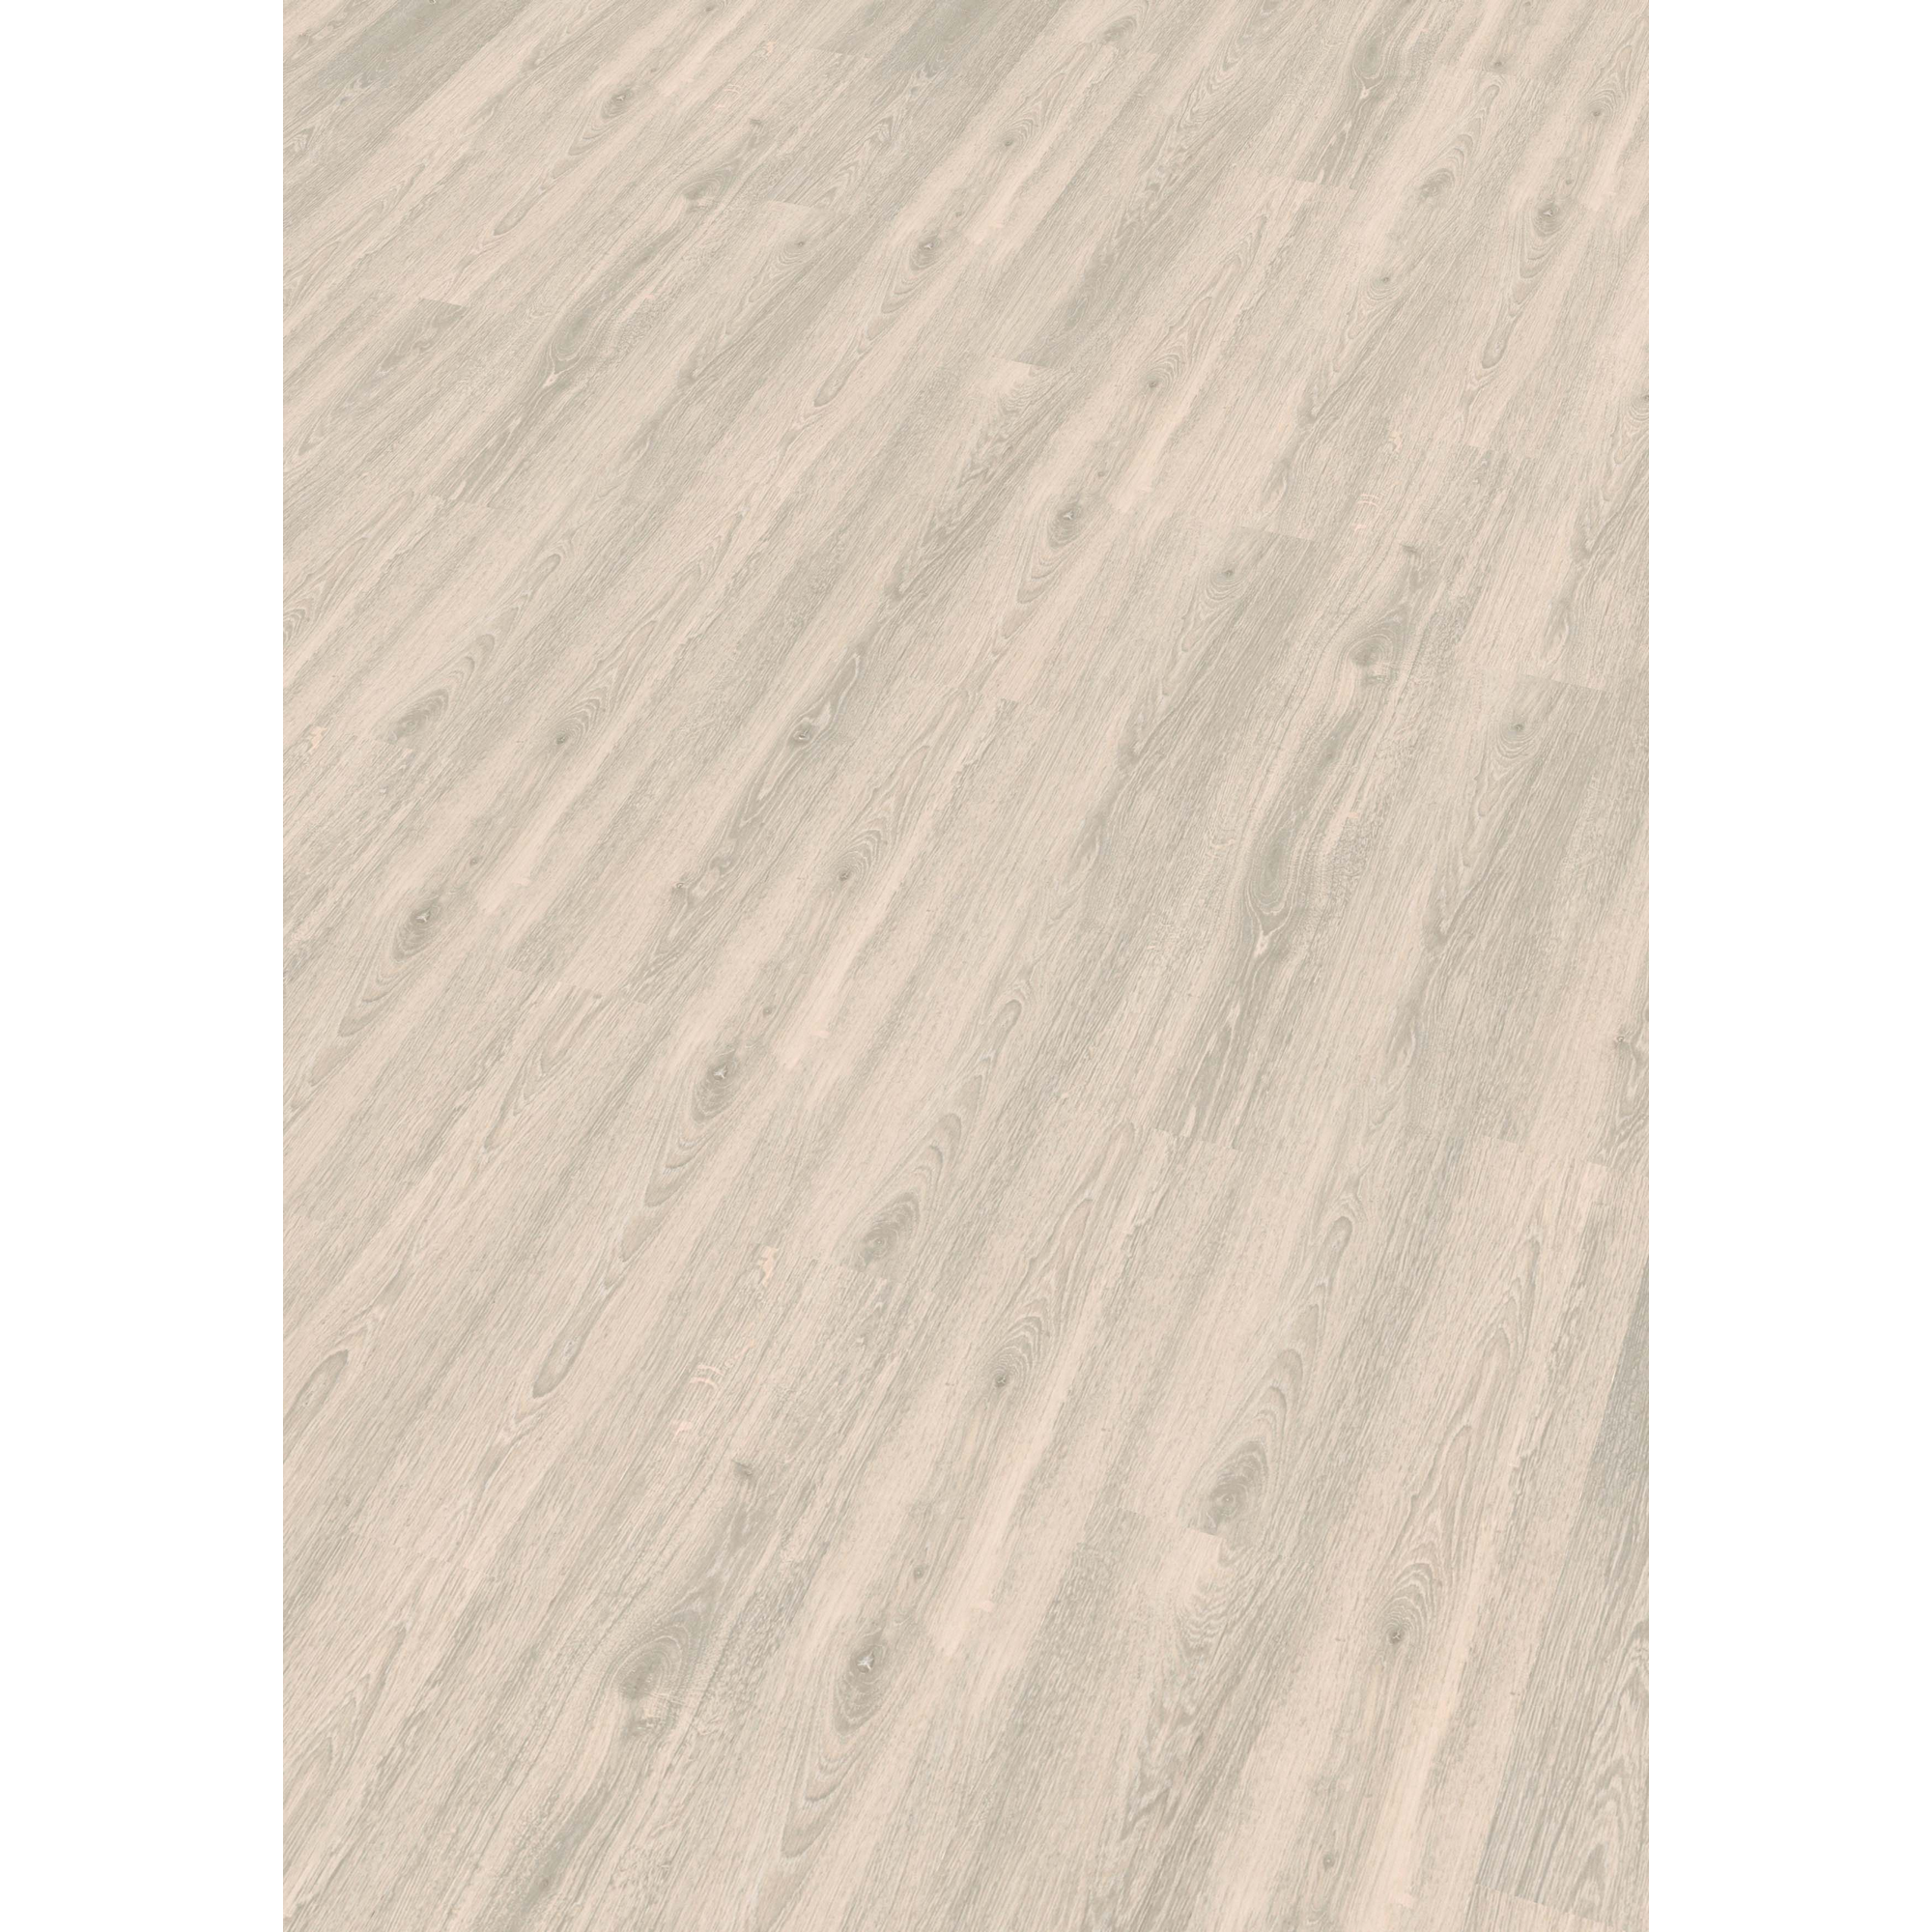 Vinylboden 'Comfort' Polar Oak beige, grau 10,5 mm + product picture